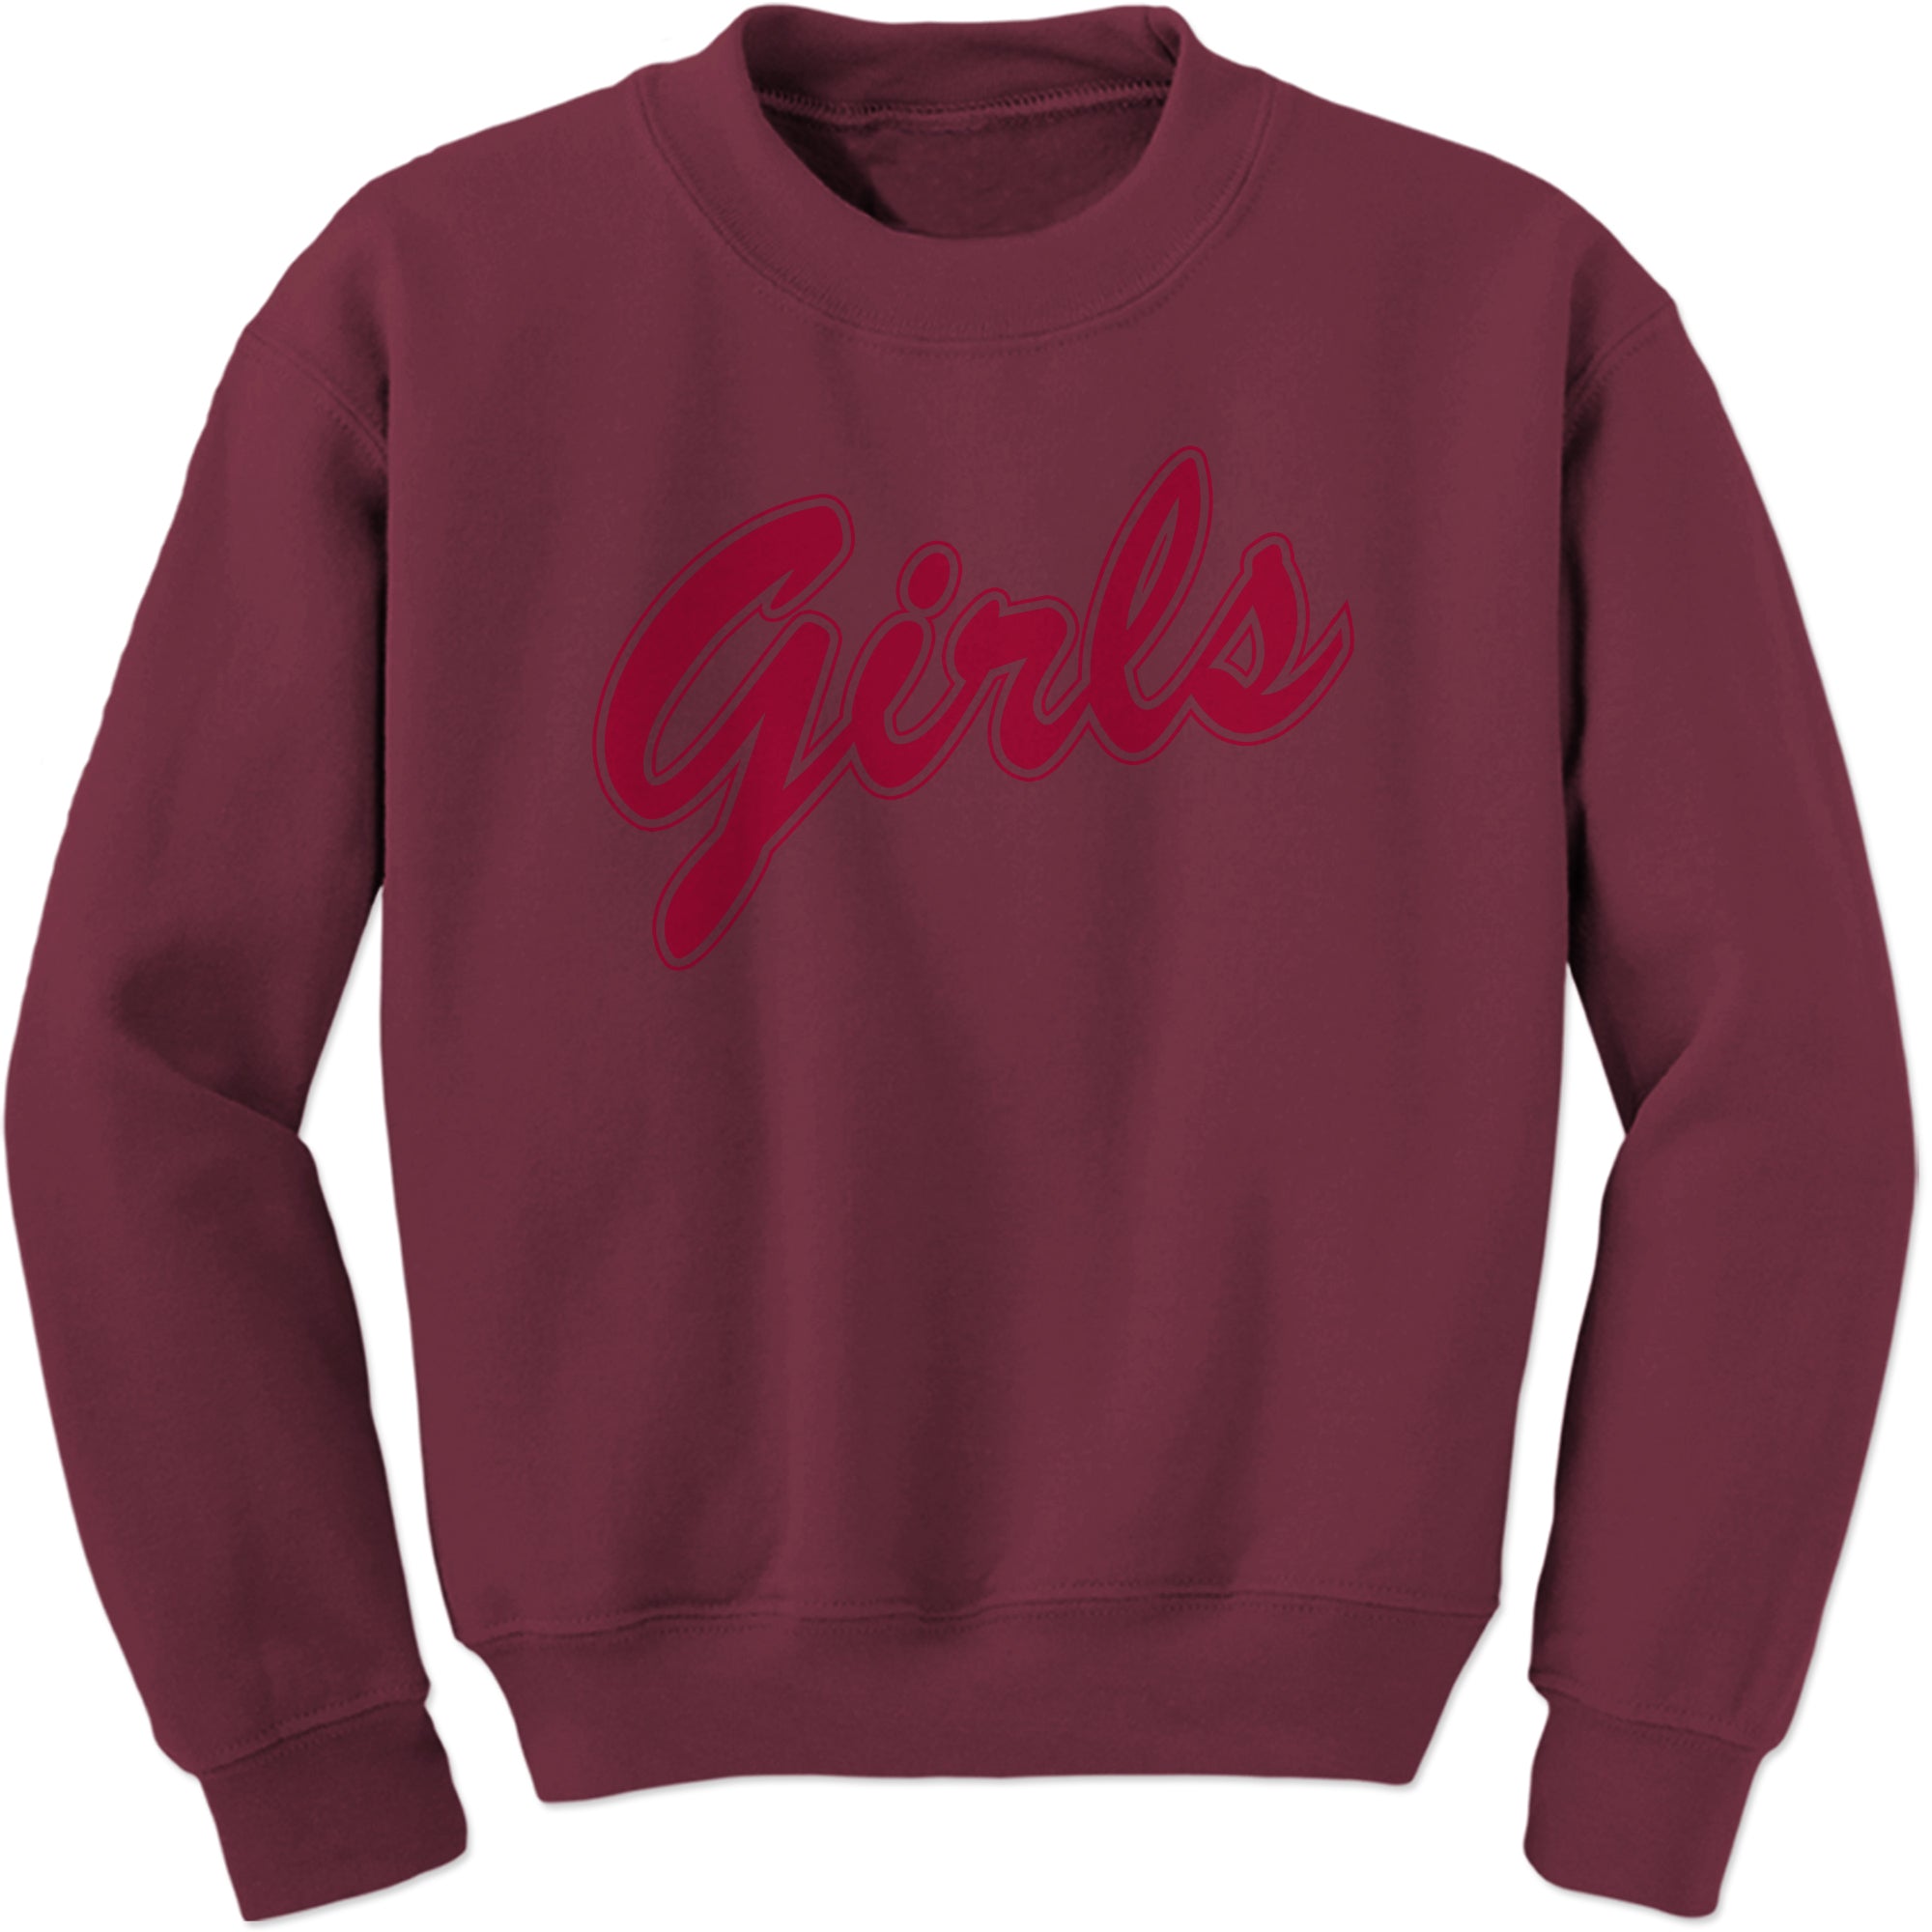 Friends Shirt That Says Girls (Red) Sweatshirt